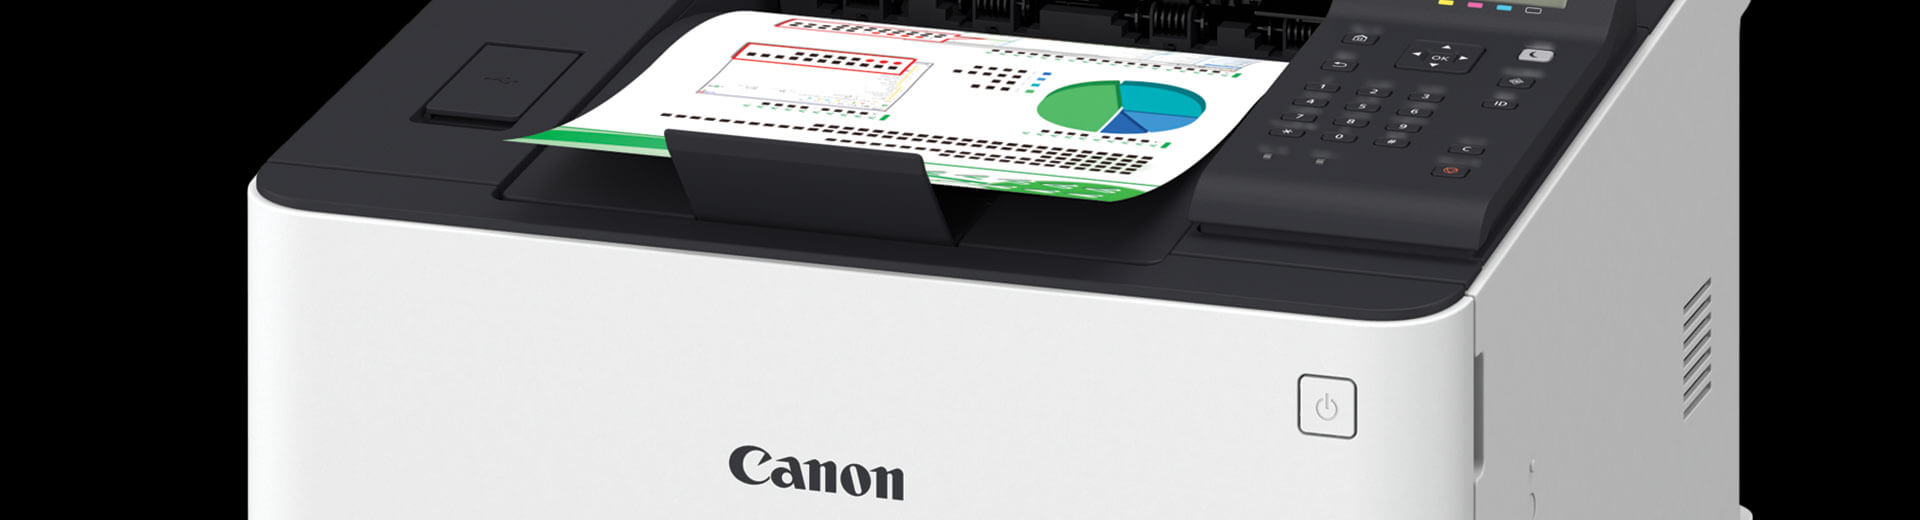 Canon India Printers Drivers Download Lbp 2900